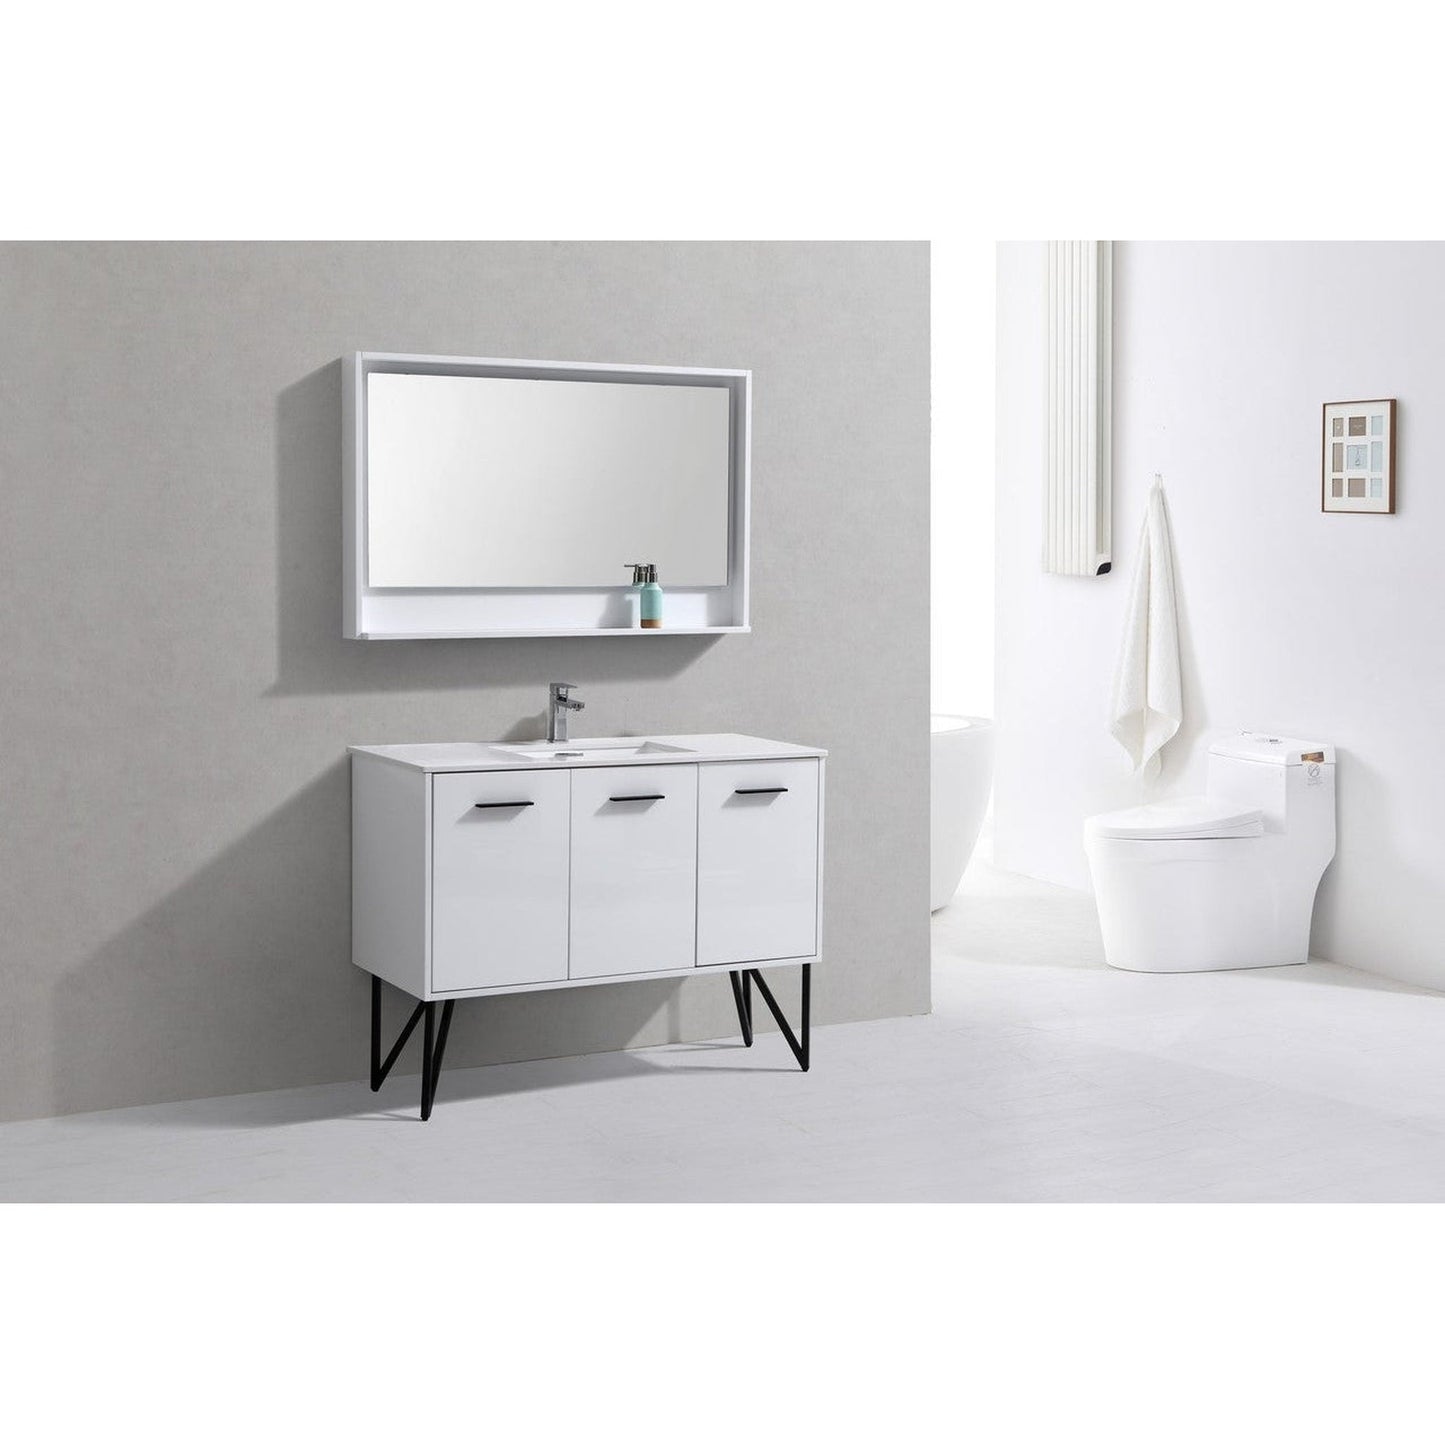 KubeBath Bosco 48" High Gloss White Modern Freestanding Bathroom Vanity With Single Undermount Sink With Overflow and 48" White Framed Mirror